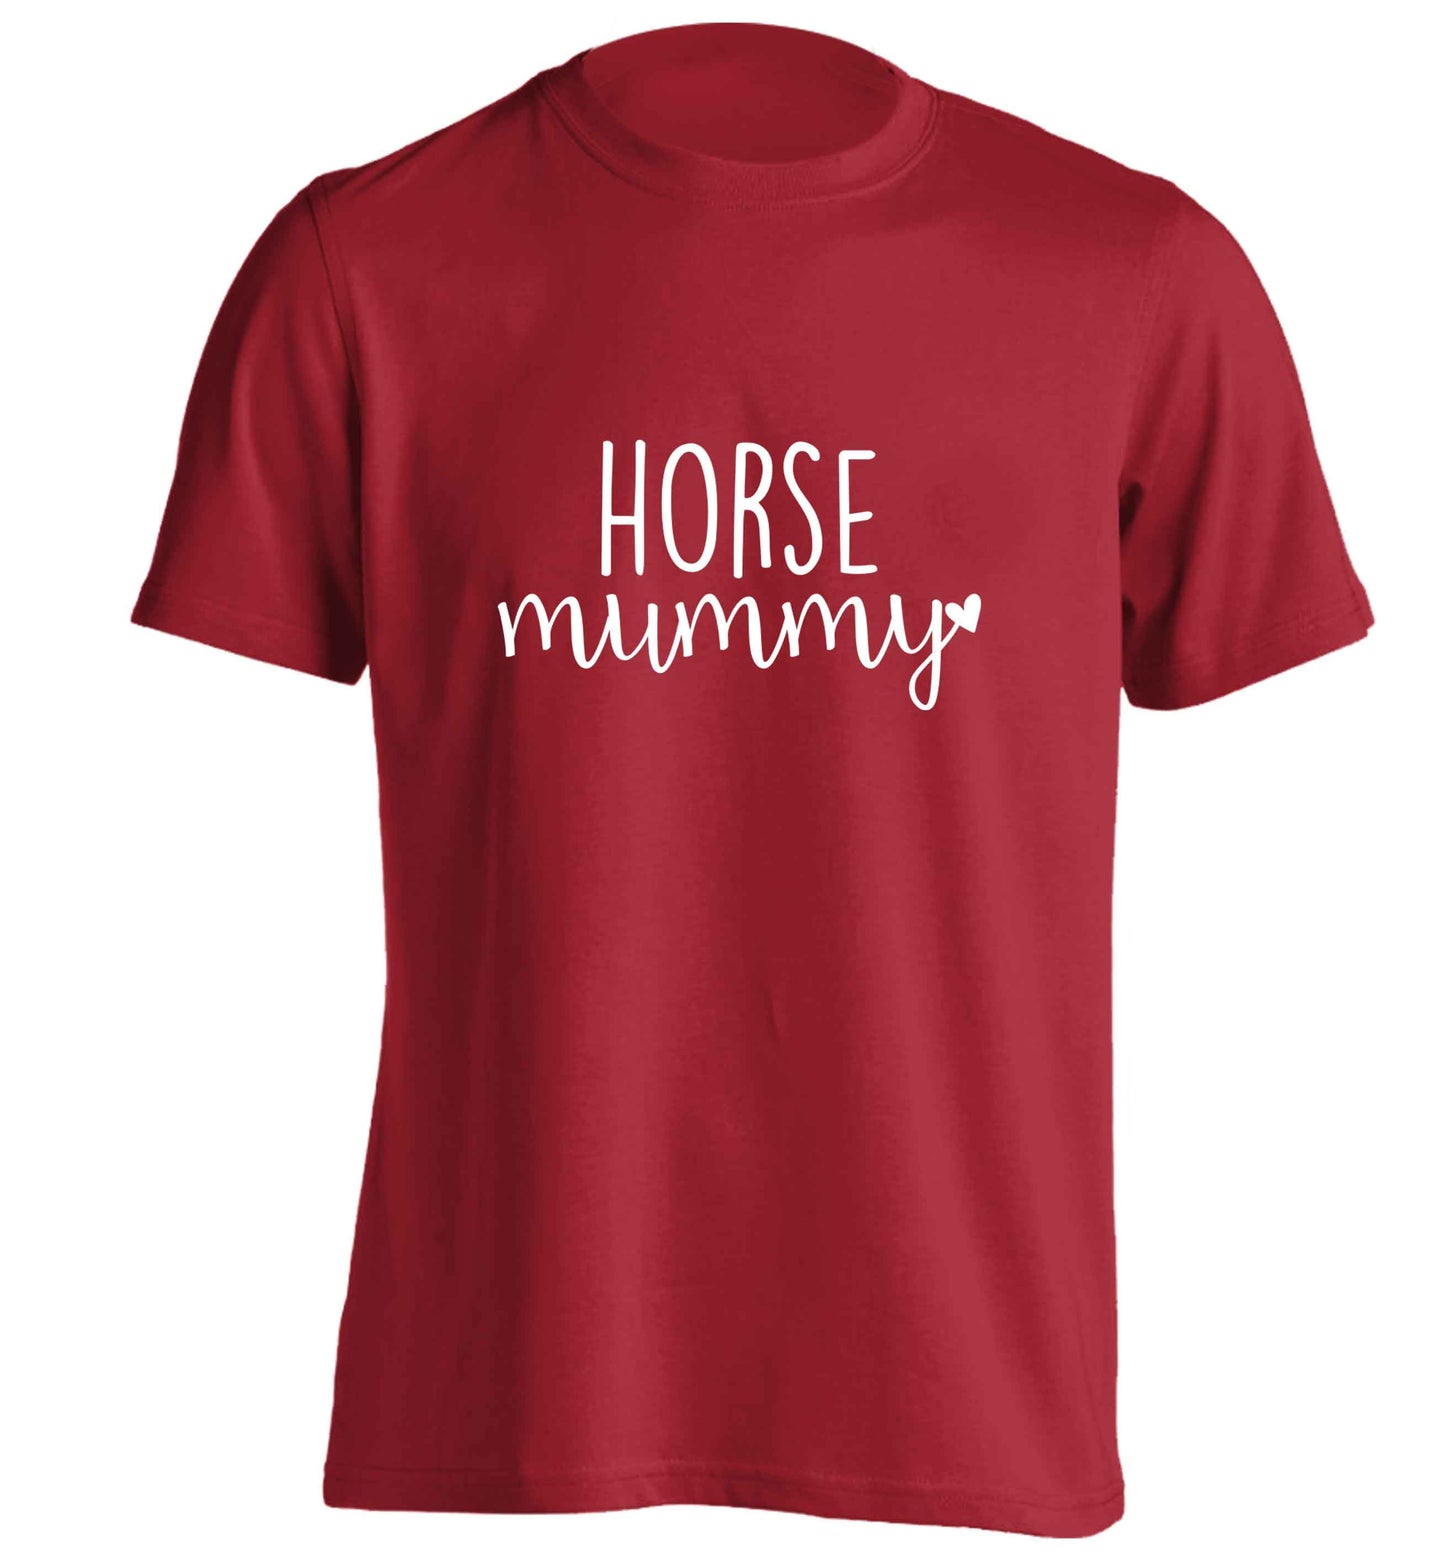 Horse mummy adults unisex red Tshirt 2XL